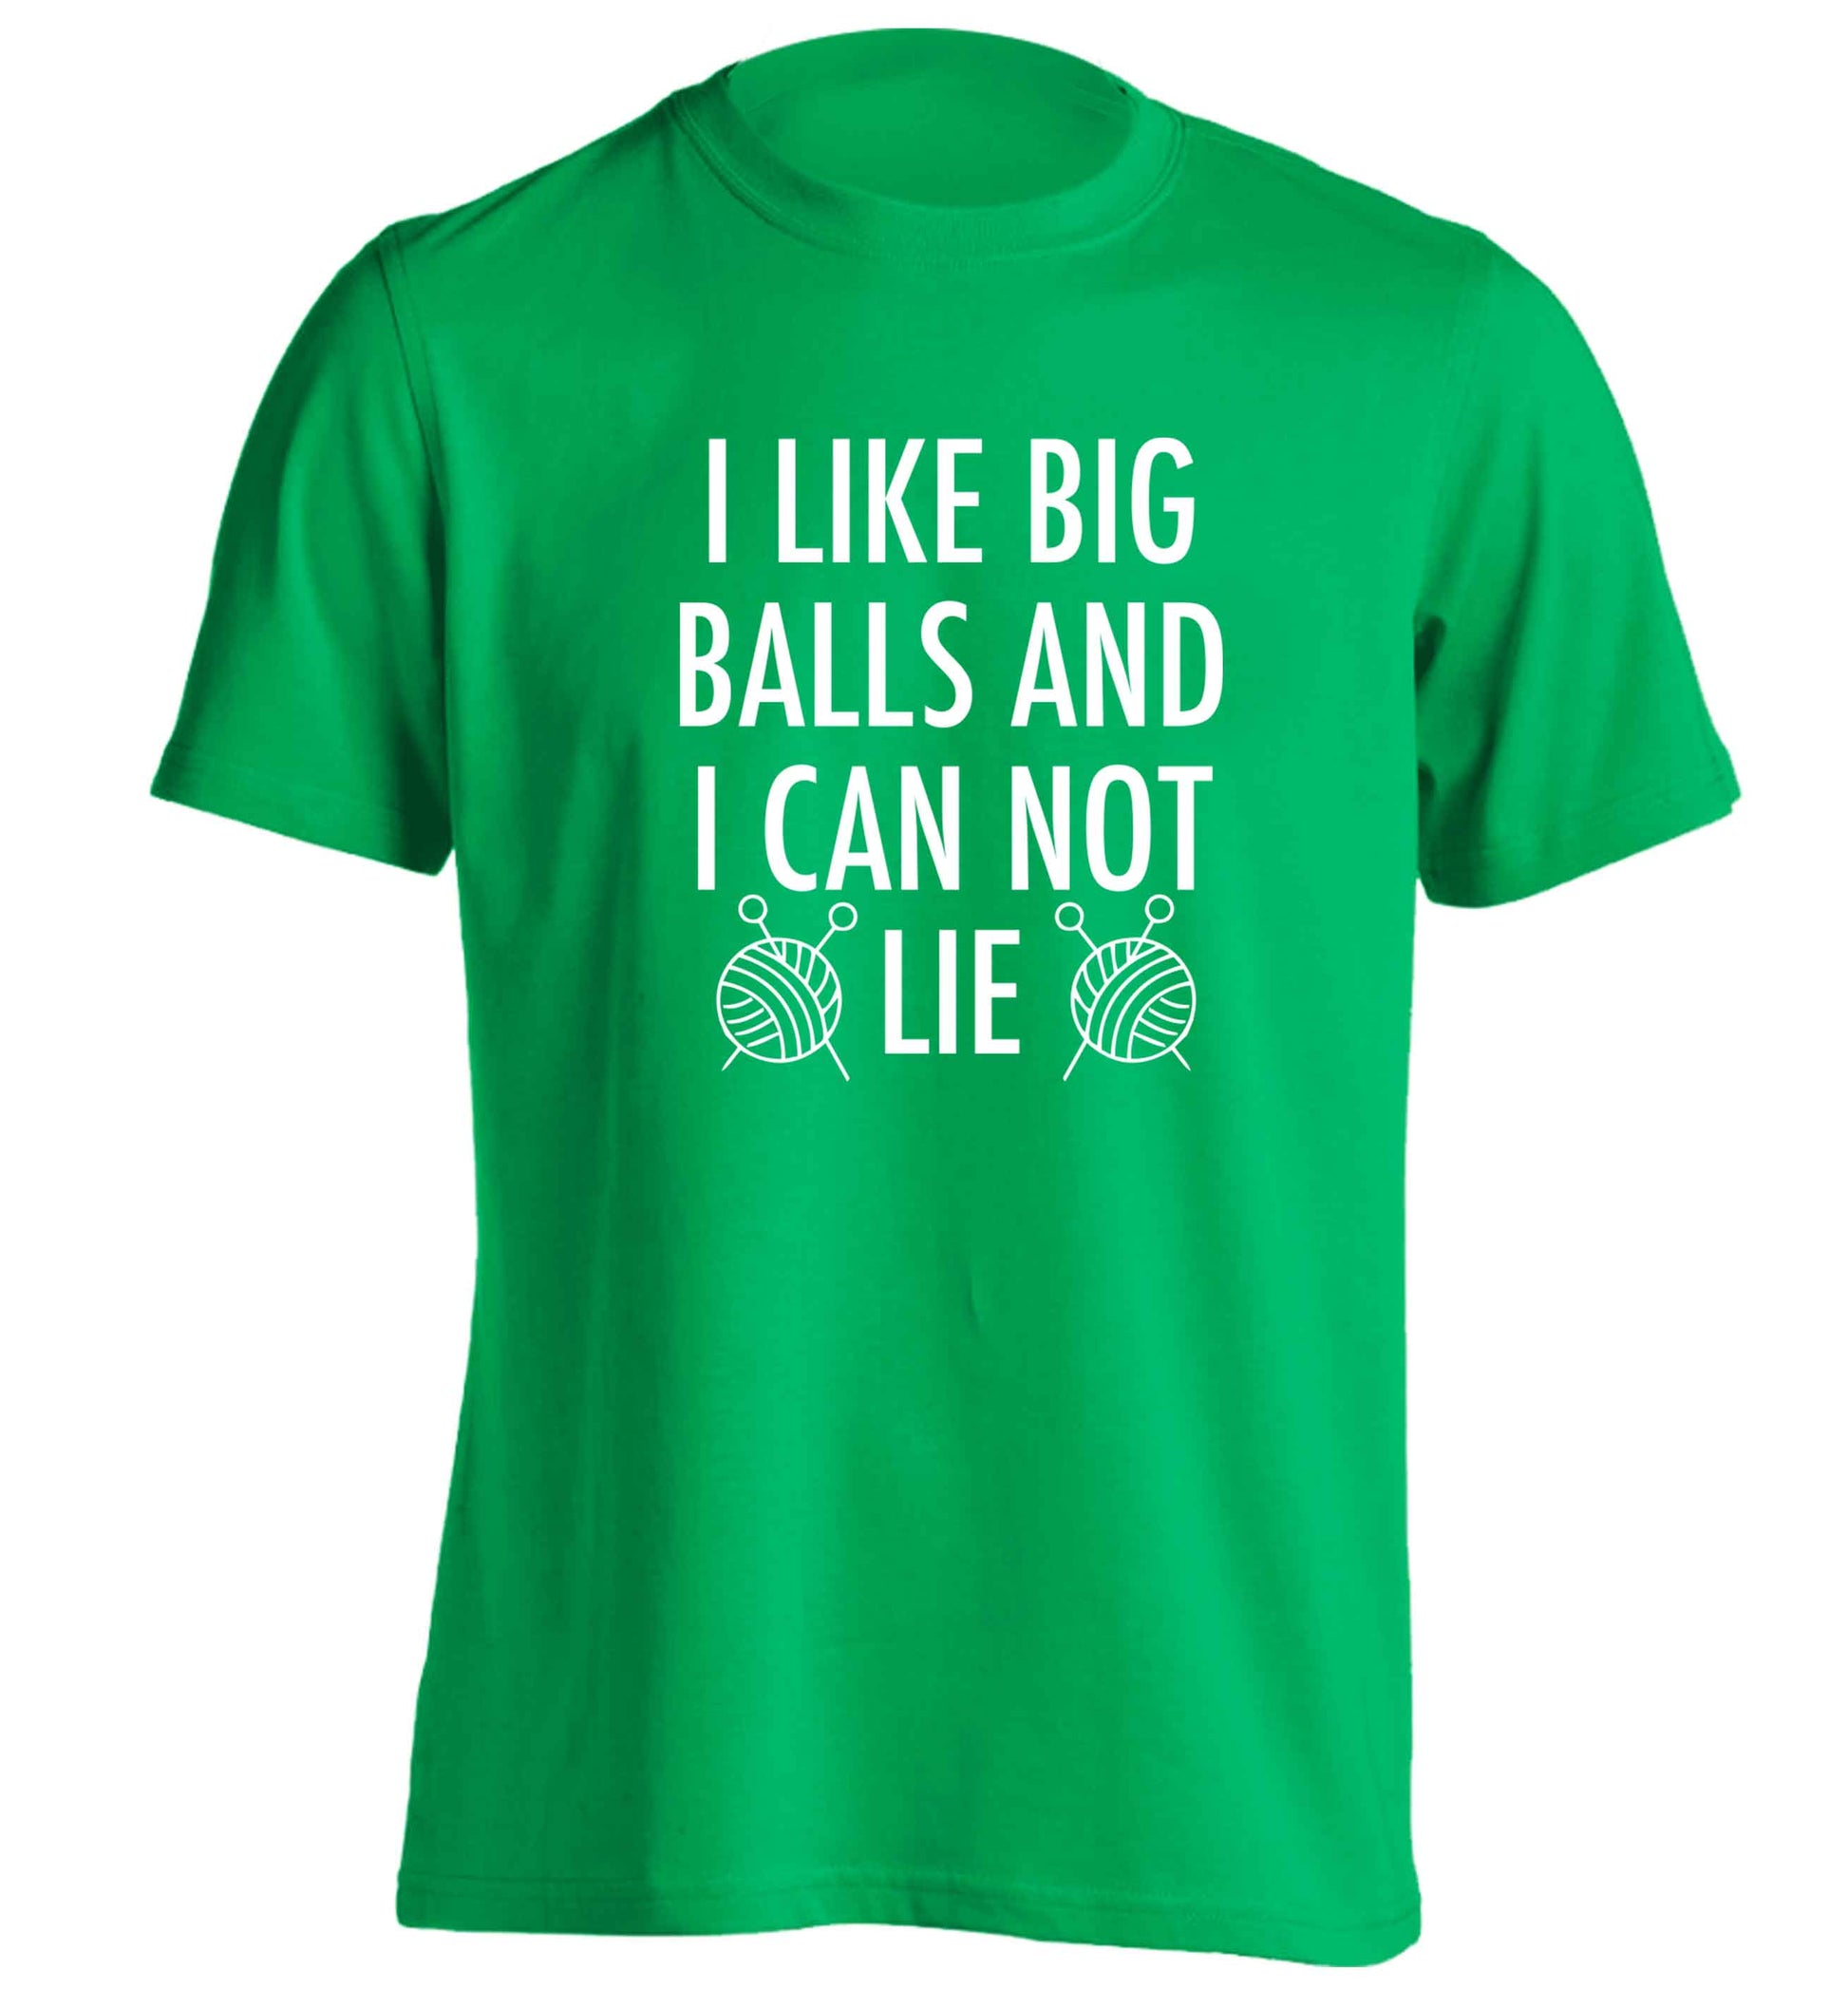 I like big balls and I can not lie adults unisex green Tshirt 2XL